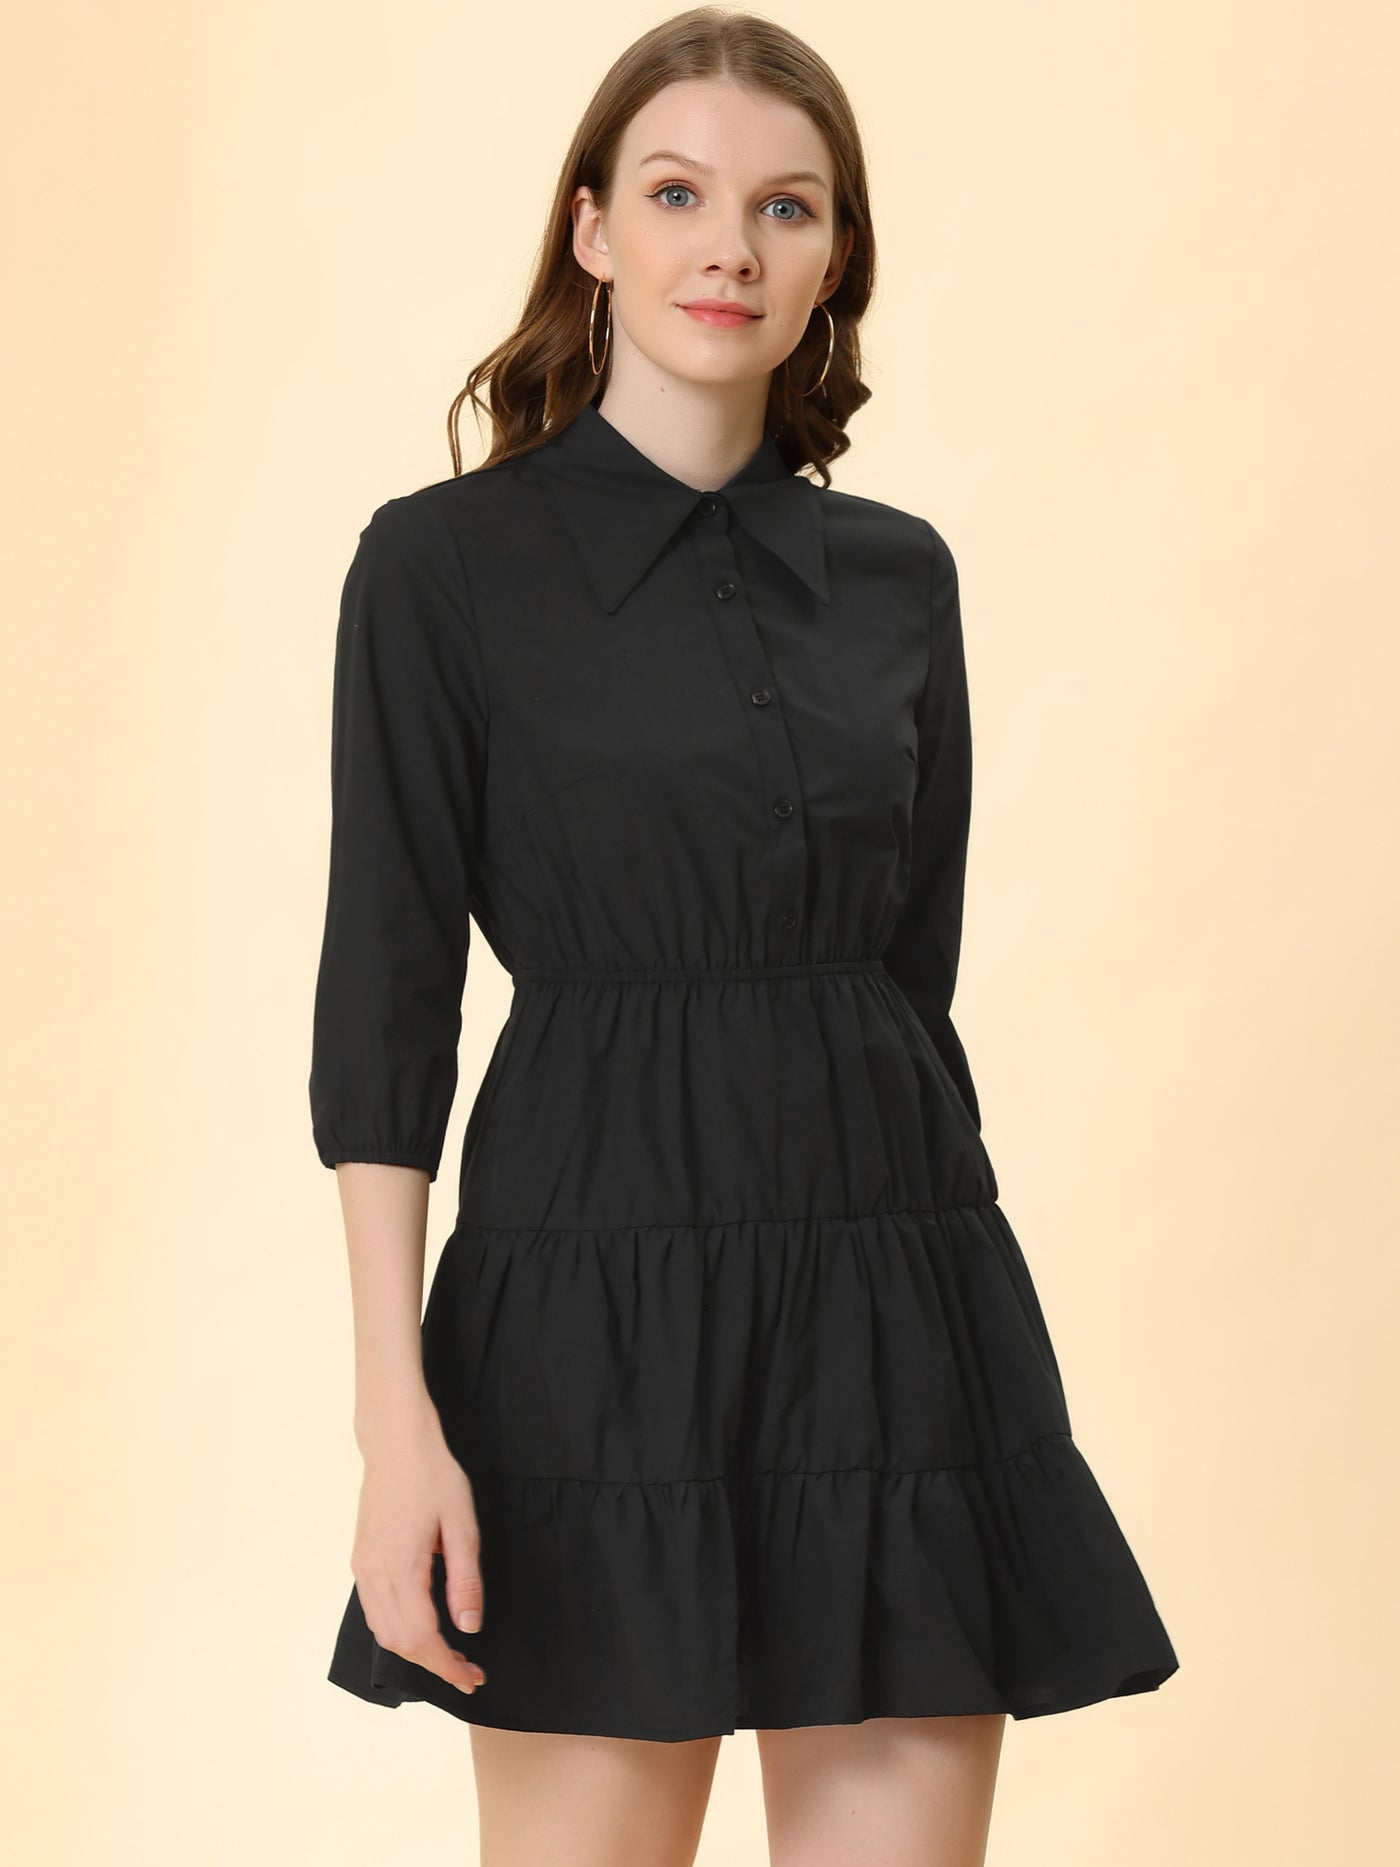 Allegra K 3/4 Sleeve Casual Fall Elastic Waist Cute Collared Tiered Mini Shirt Dress